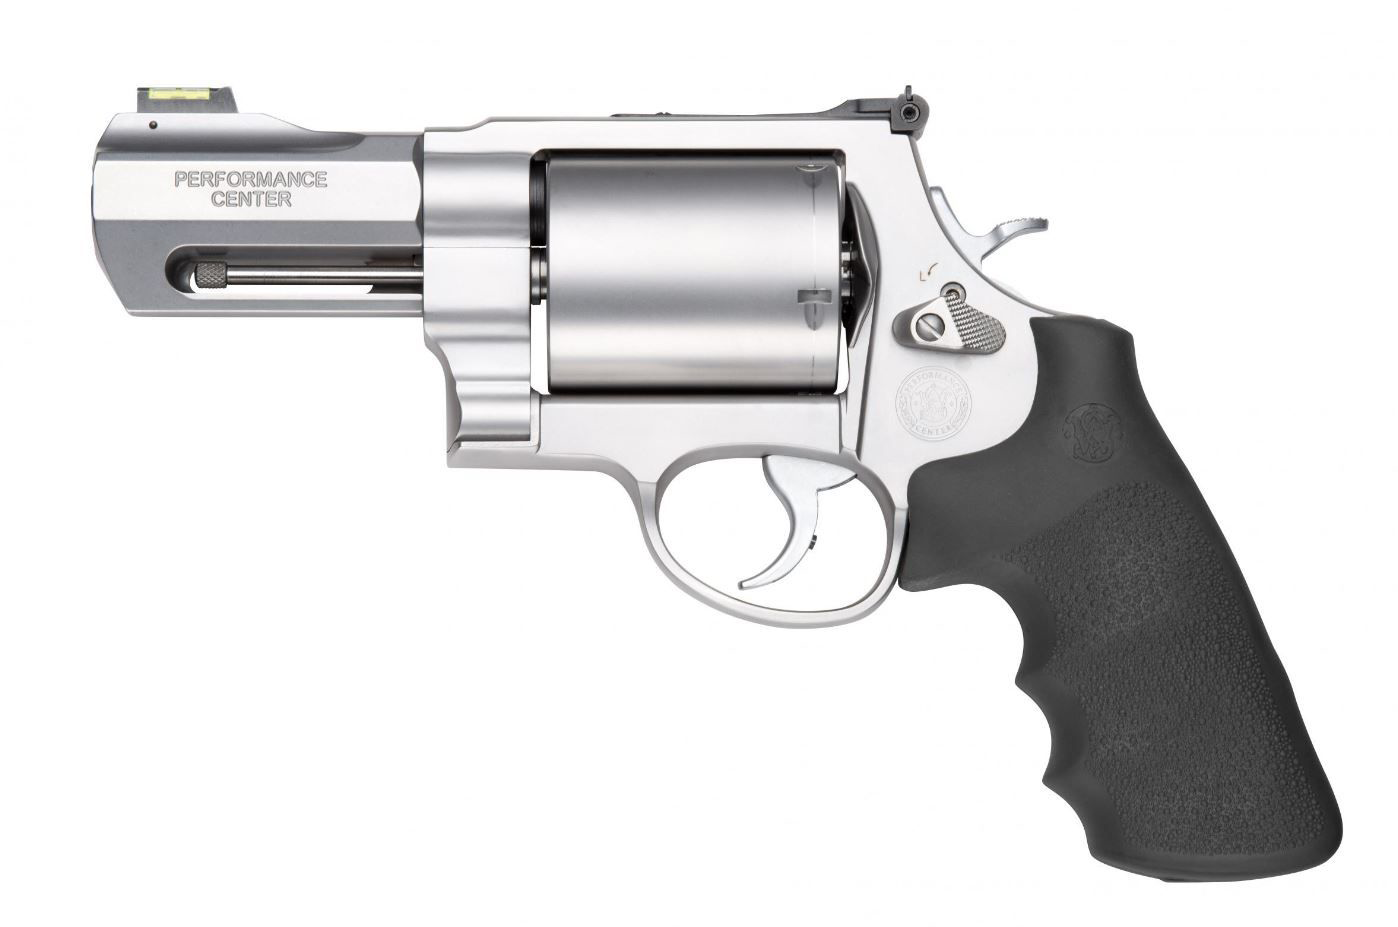 Smith  Wesson Model SW500 SingleDouble Action Revolver with HI VIZ Fiber Optic Sights